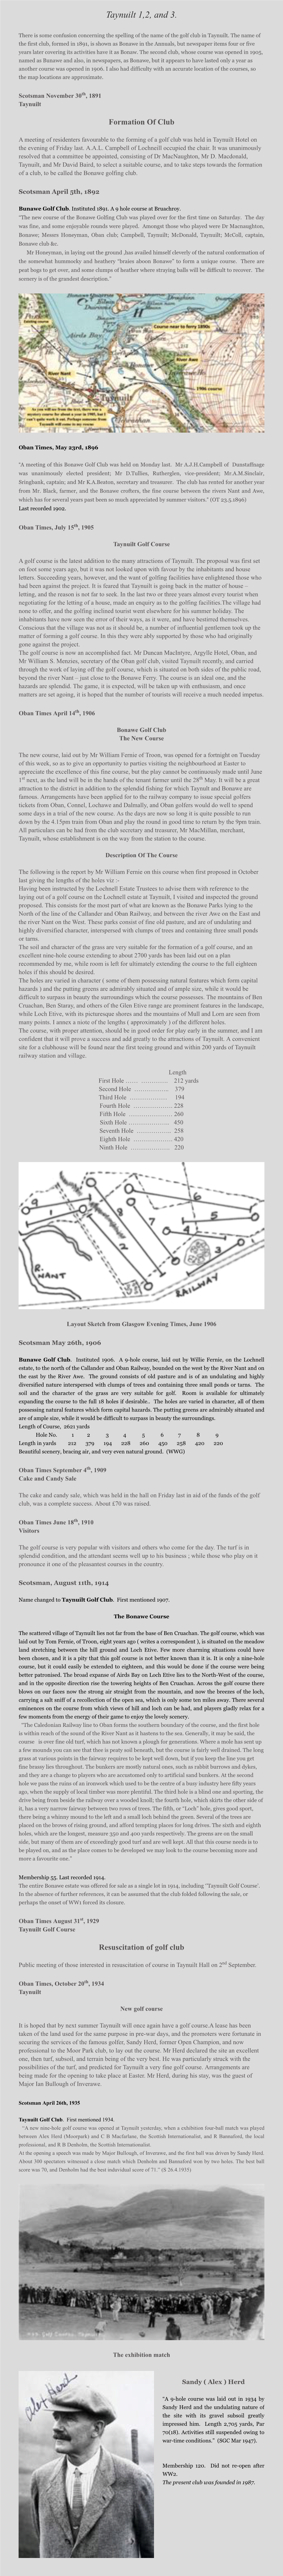 History of Taynuilt Golf Club